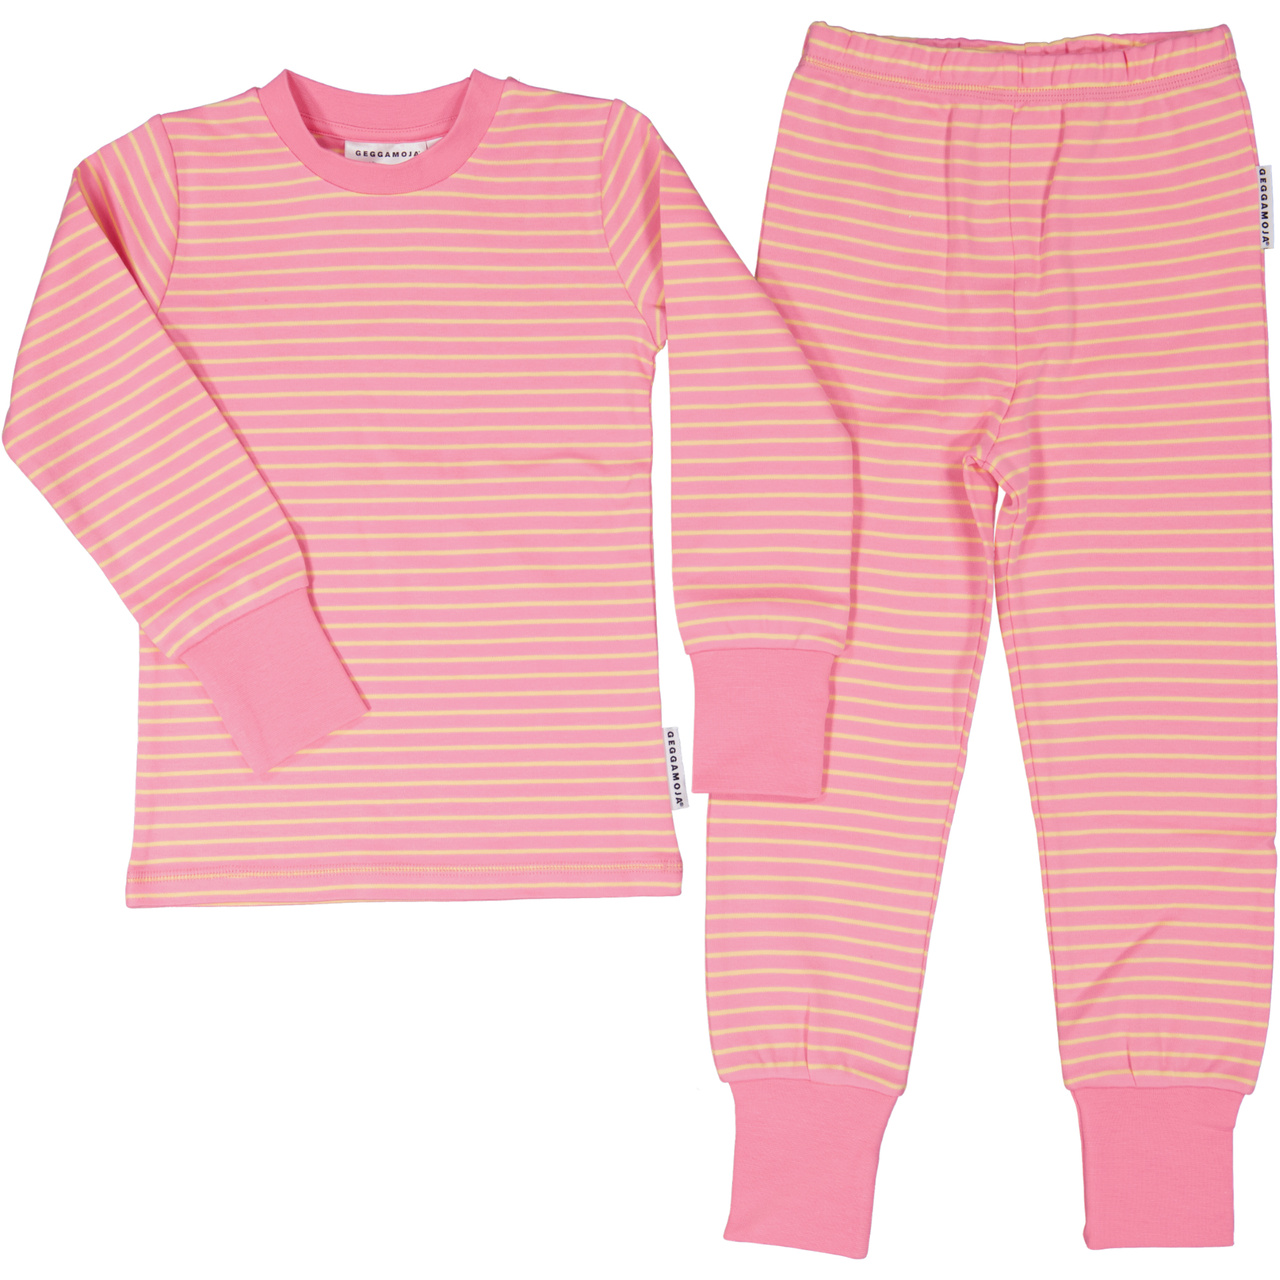 Two pcs pyjamas Pink/yellow  98/104